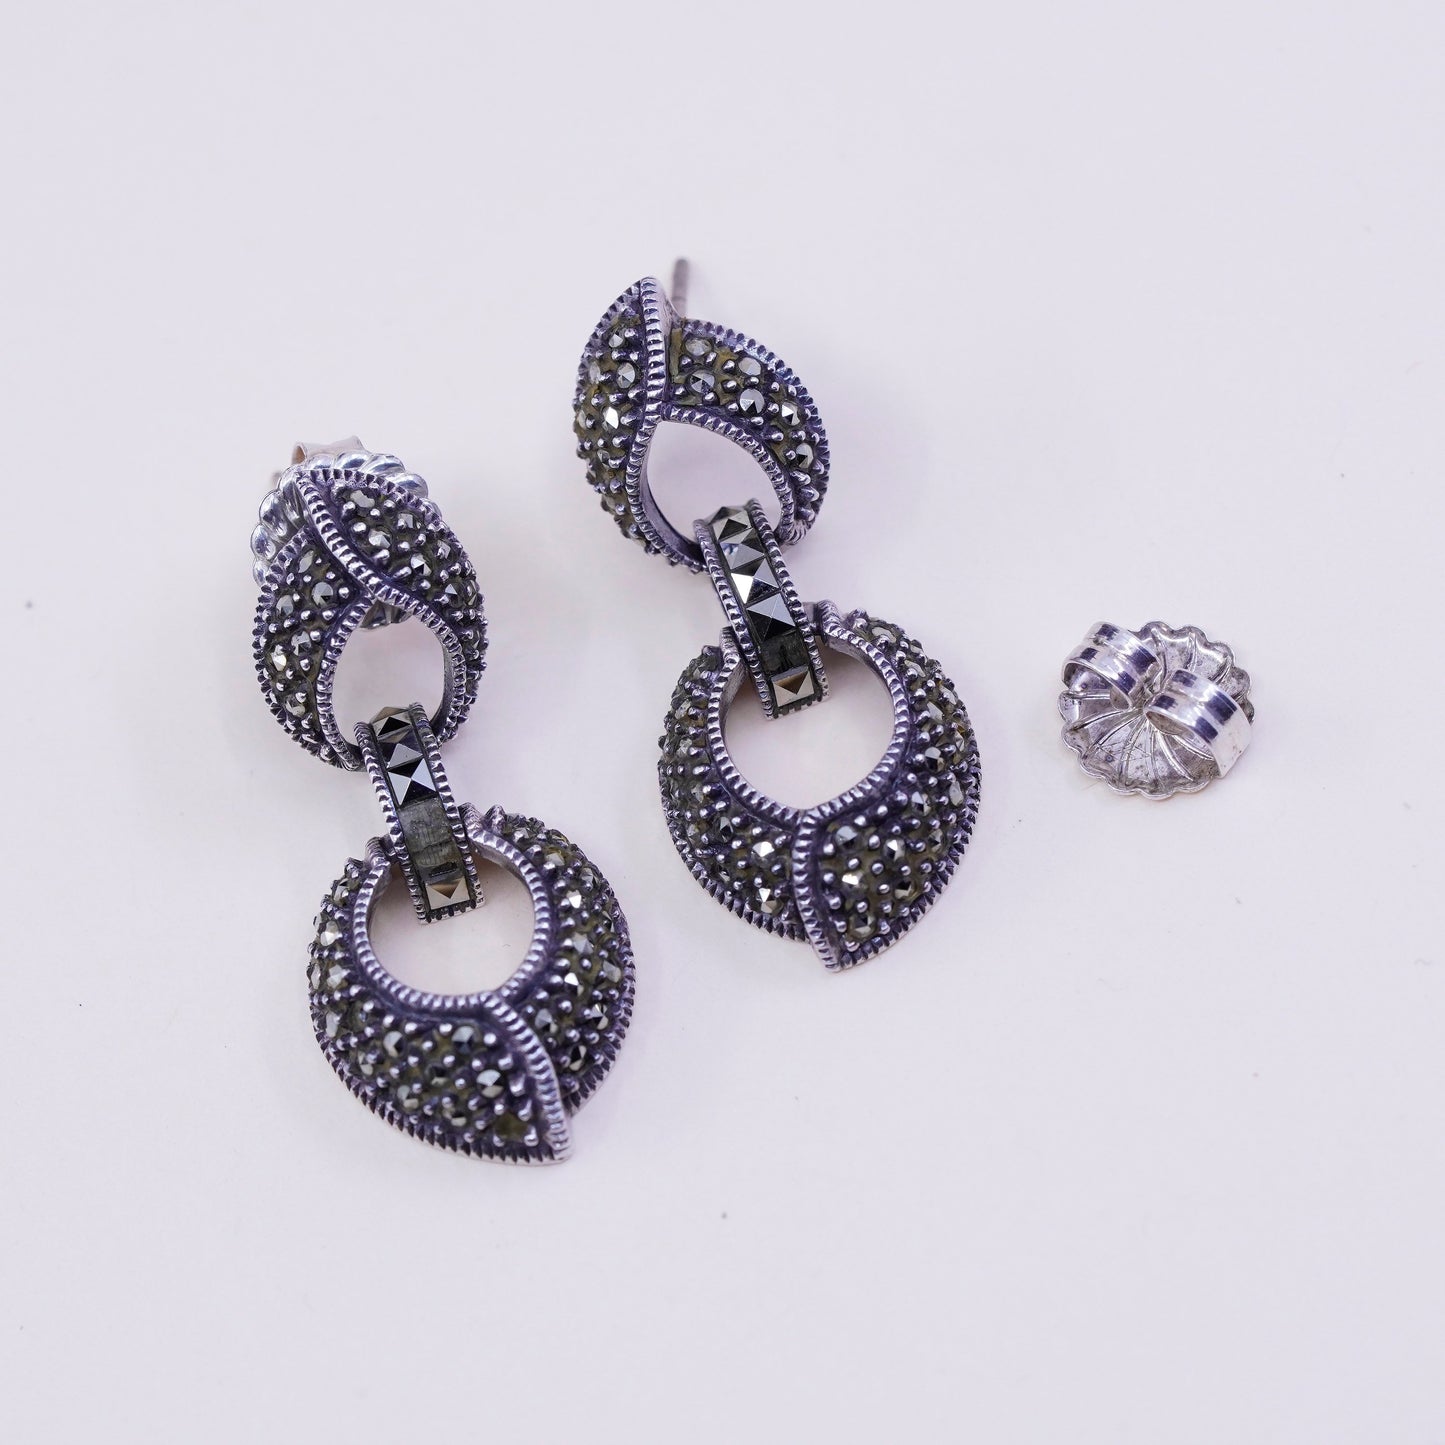 Vintage Judith Jack Sterling 925 silver earrings with Marcasite and teardrop dangles, stamped sterling JJ